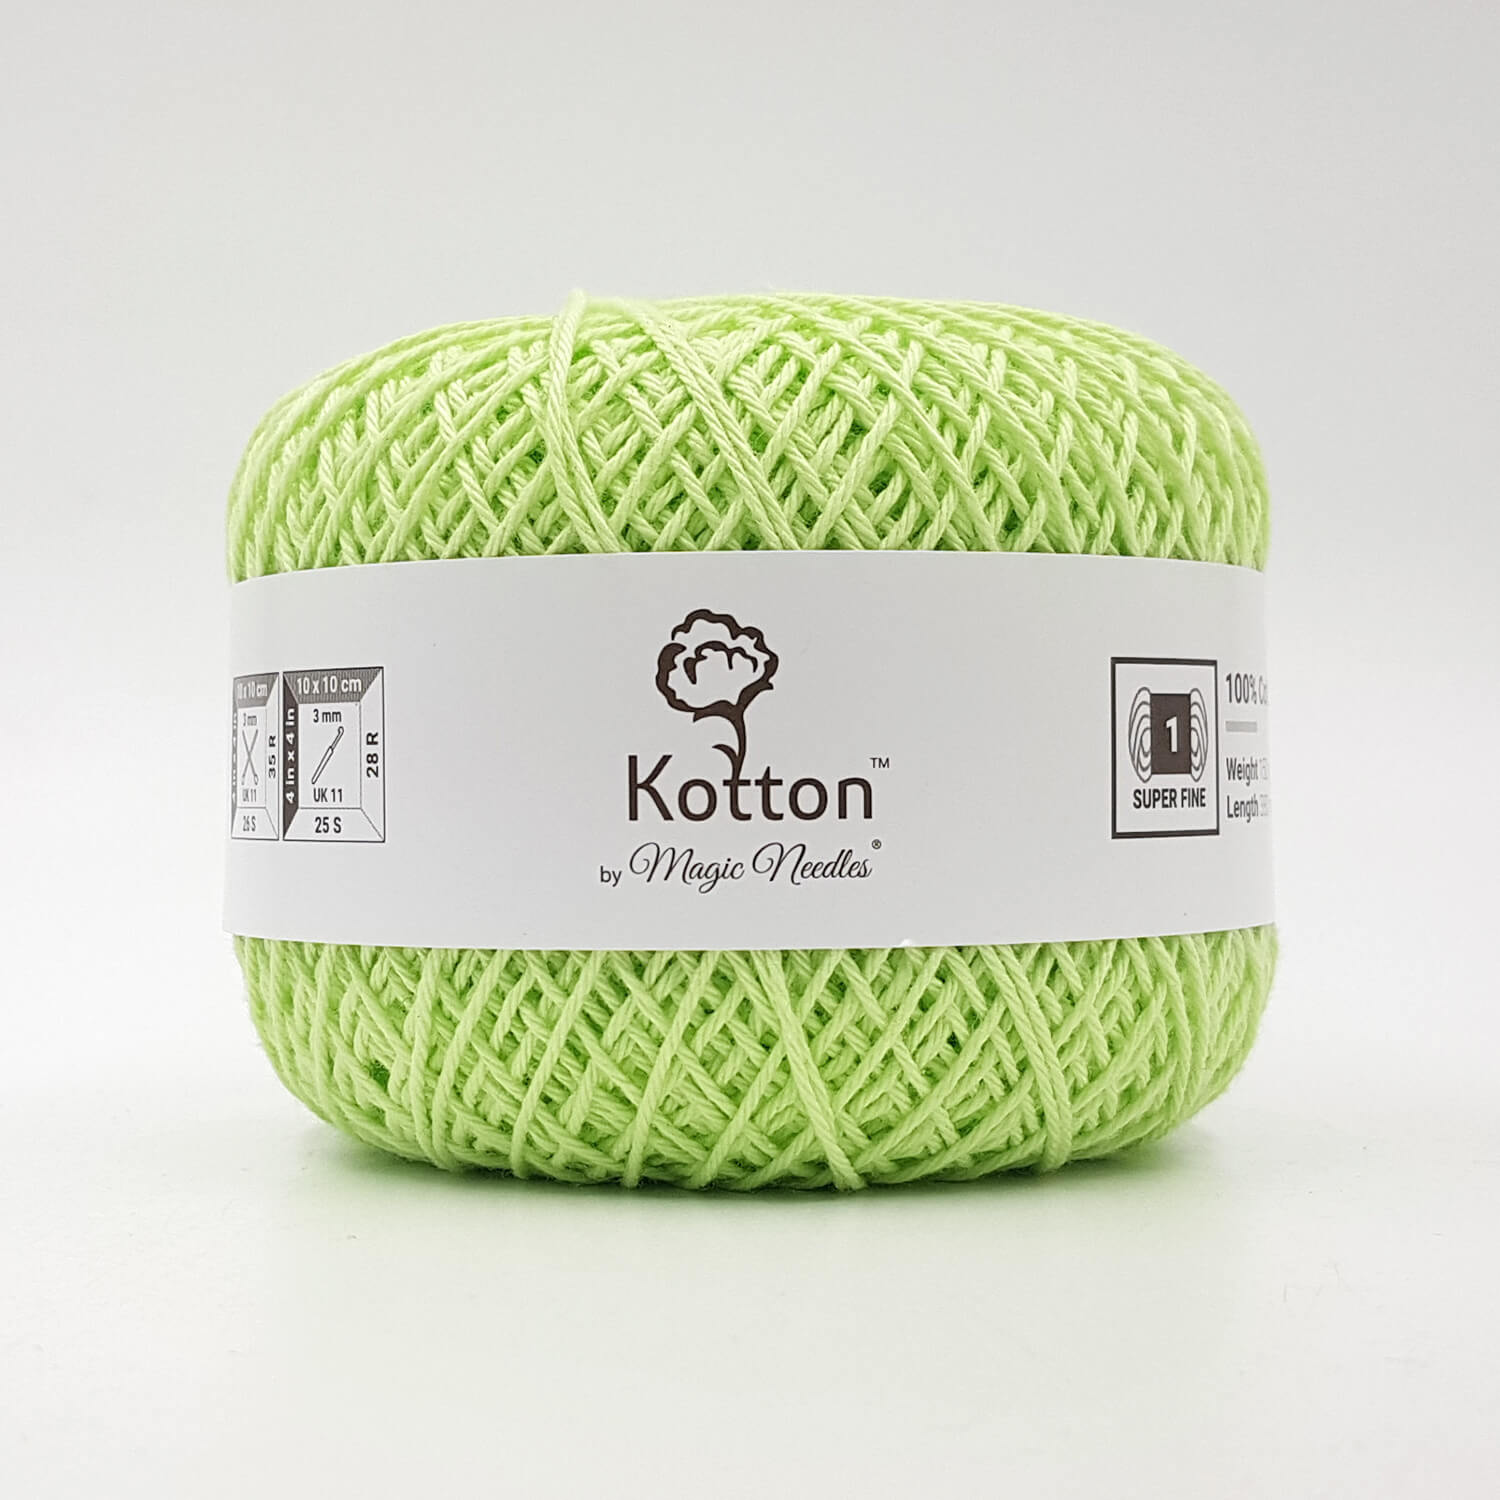 Kotton 4 ply Cotton Yarn 150 g - Lime Green 22